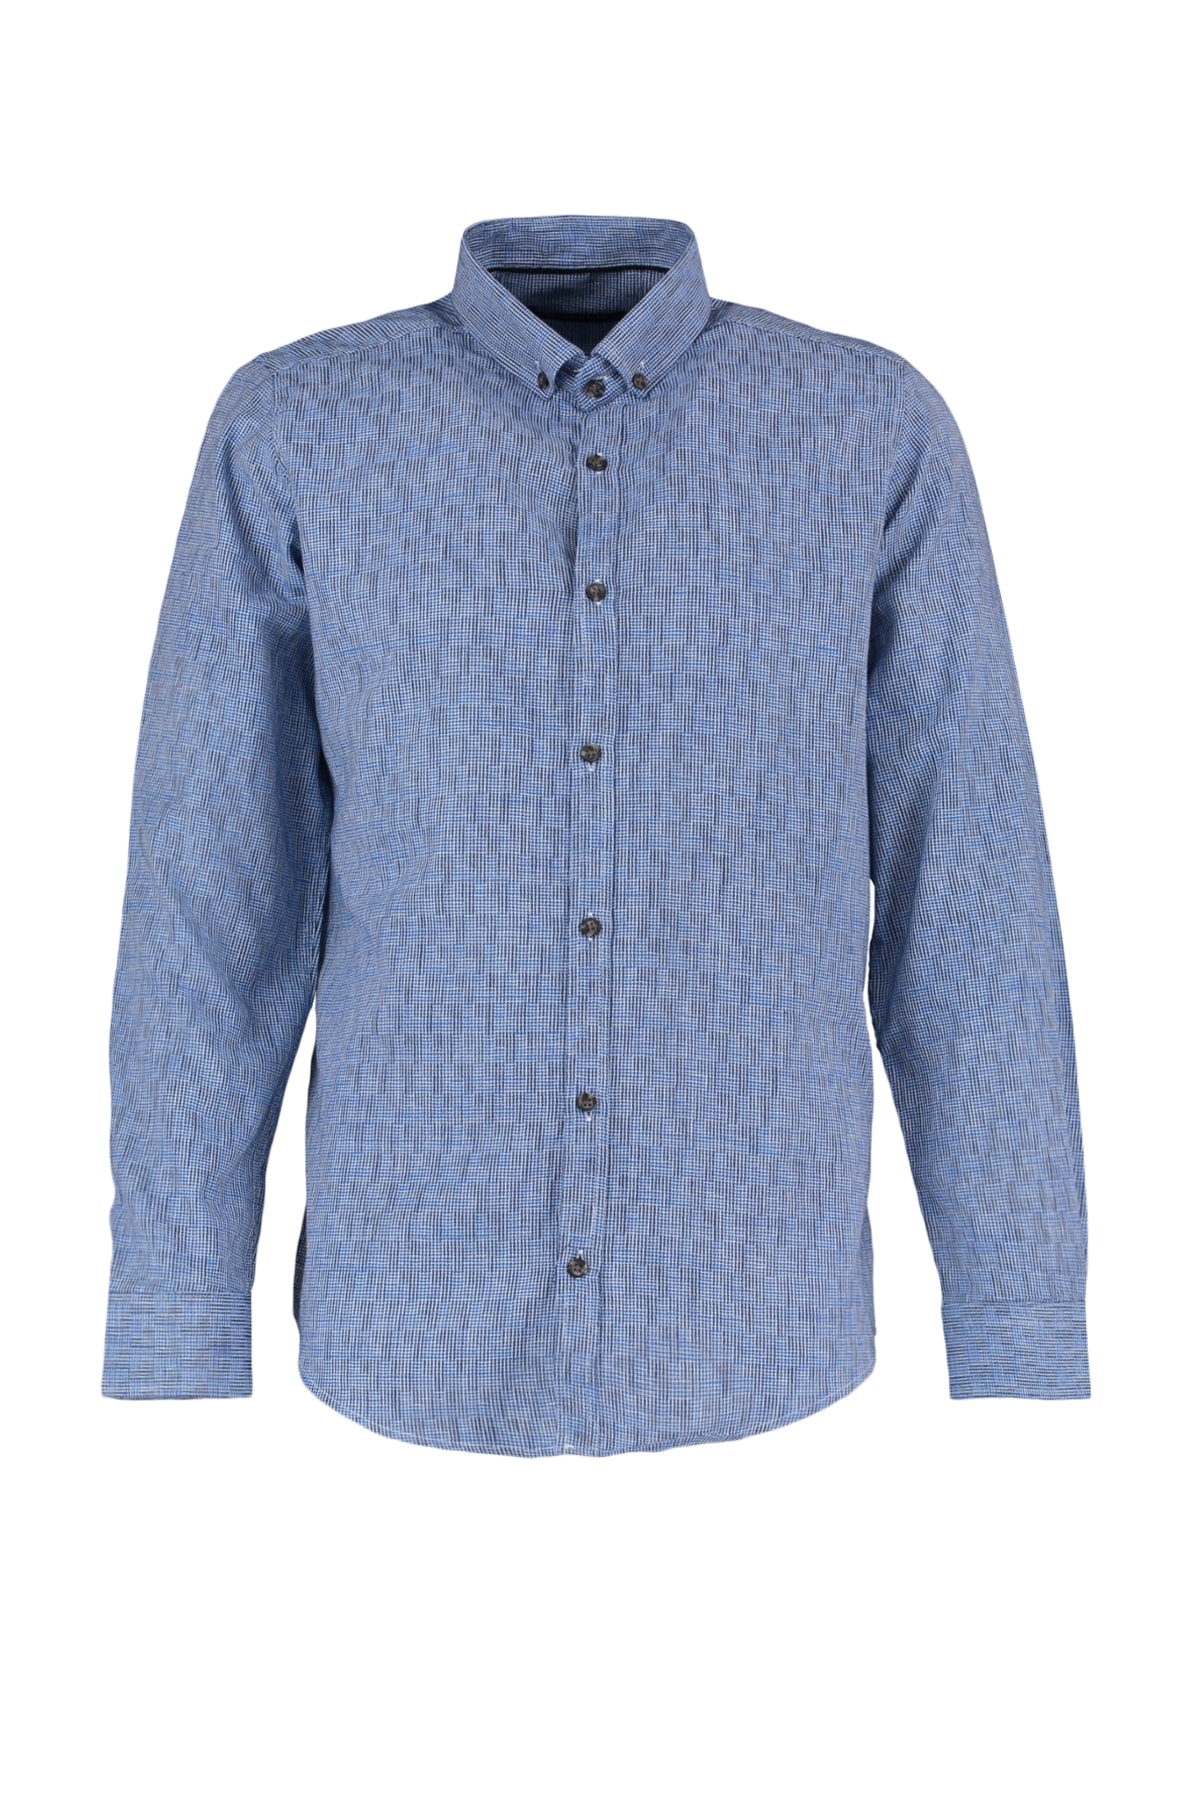 Trendyol Blue Men's Slim Fit Buttoned Collar Shirt